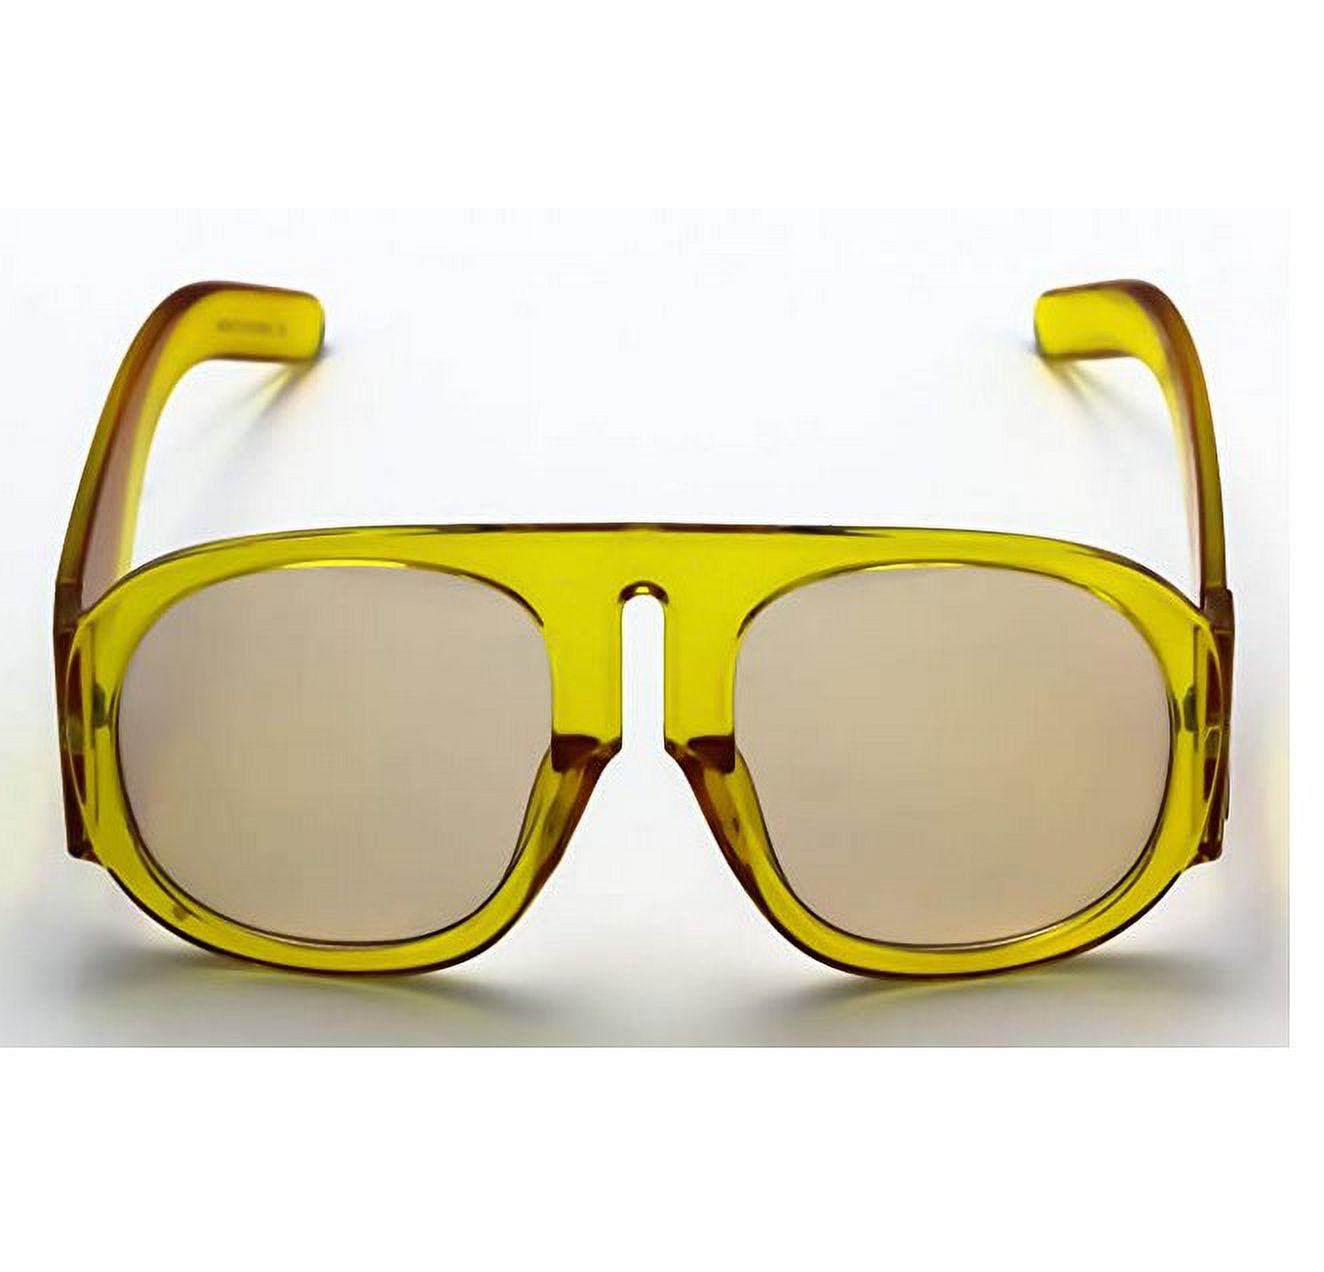 Oversize Goggle Frame Sunglasses Gradient Lens Vintage Women Fashion Shades - image 3 of 4